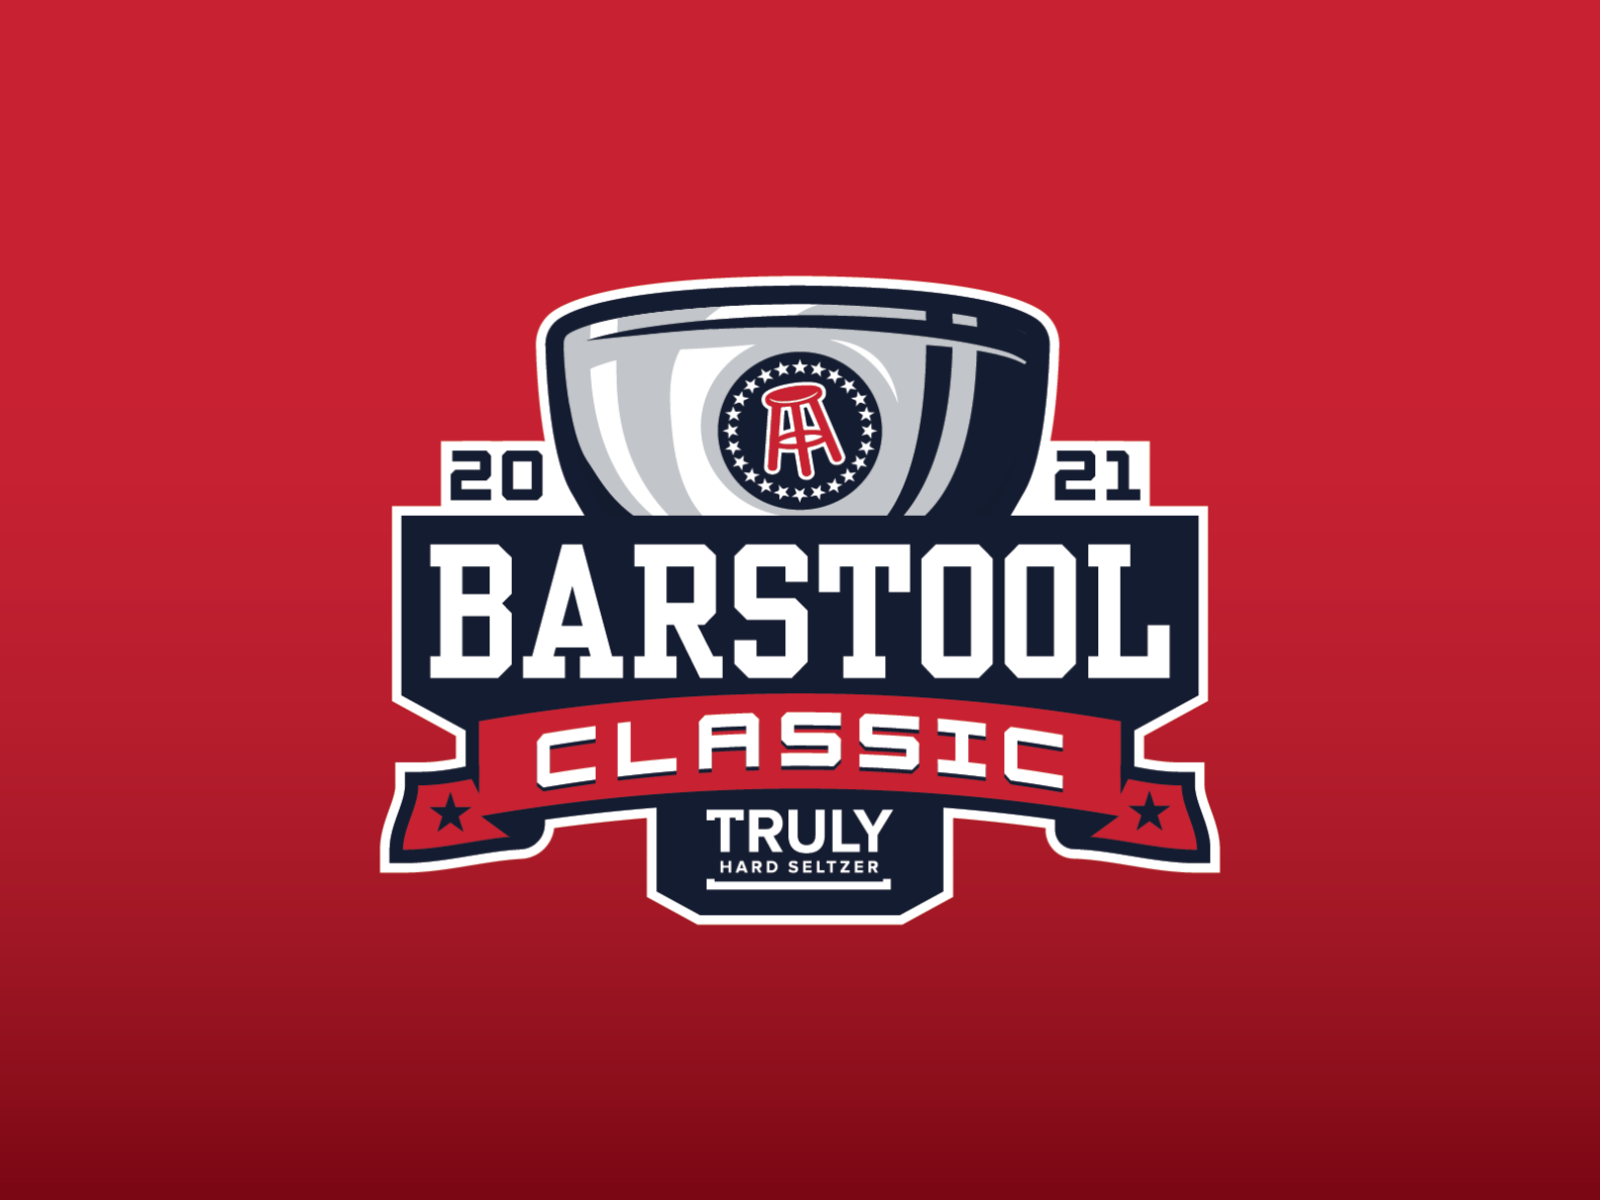 Barstool Classic Logo by Phil Kruzan Jr. on Dribbble